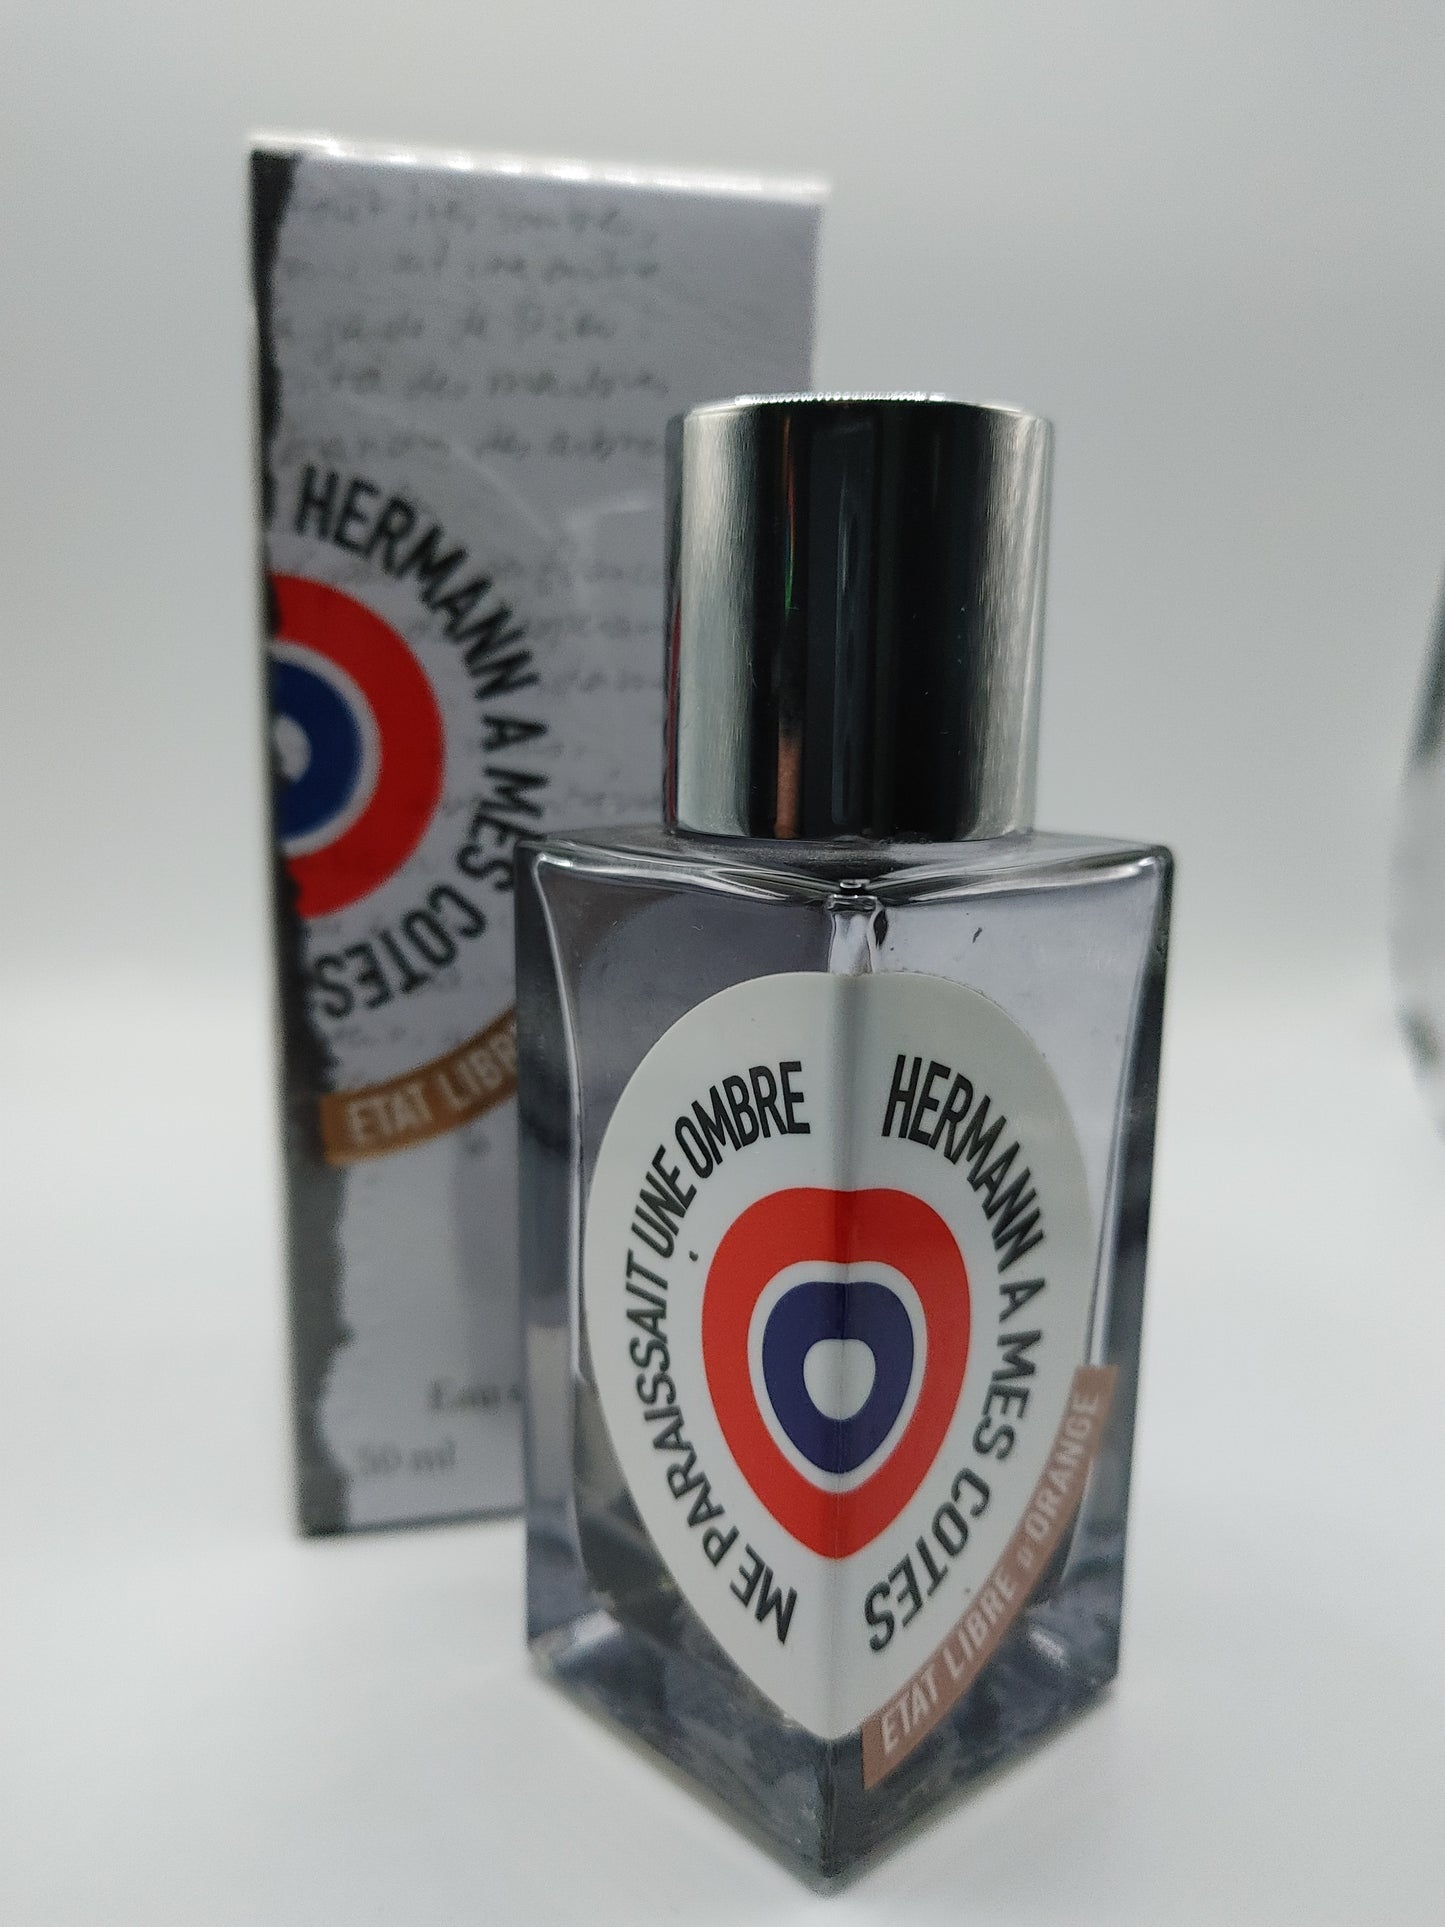 Etat Libre D’Orange Fragrance Decants. 6 to choose. Plus free sample and travel bag